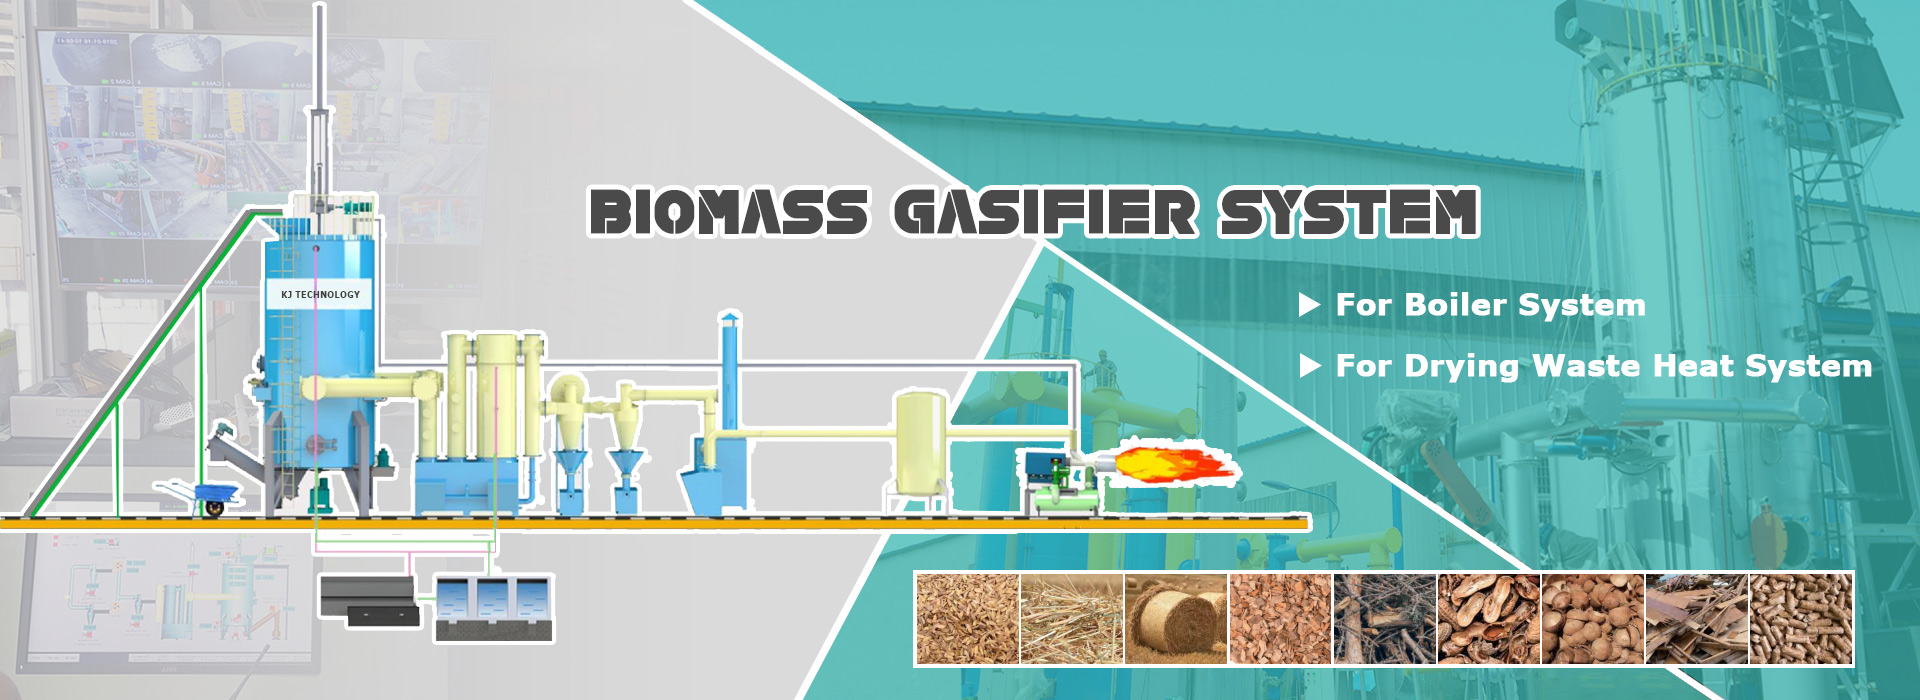 kj biomass gasification system